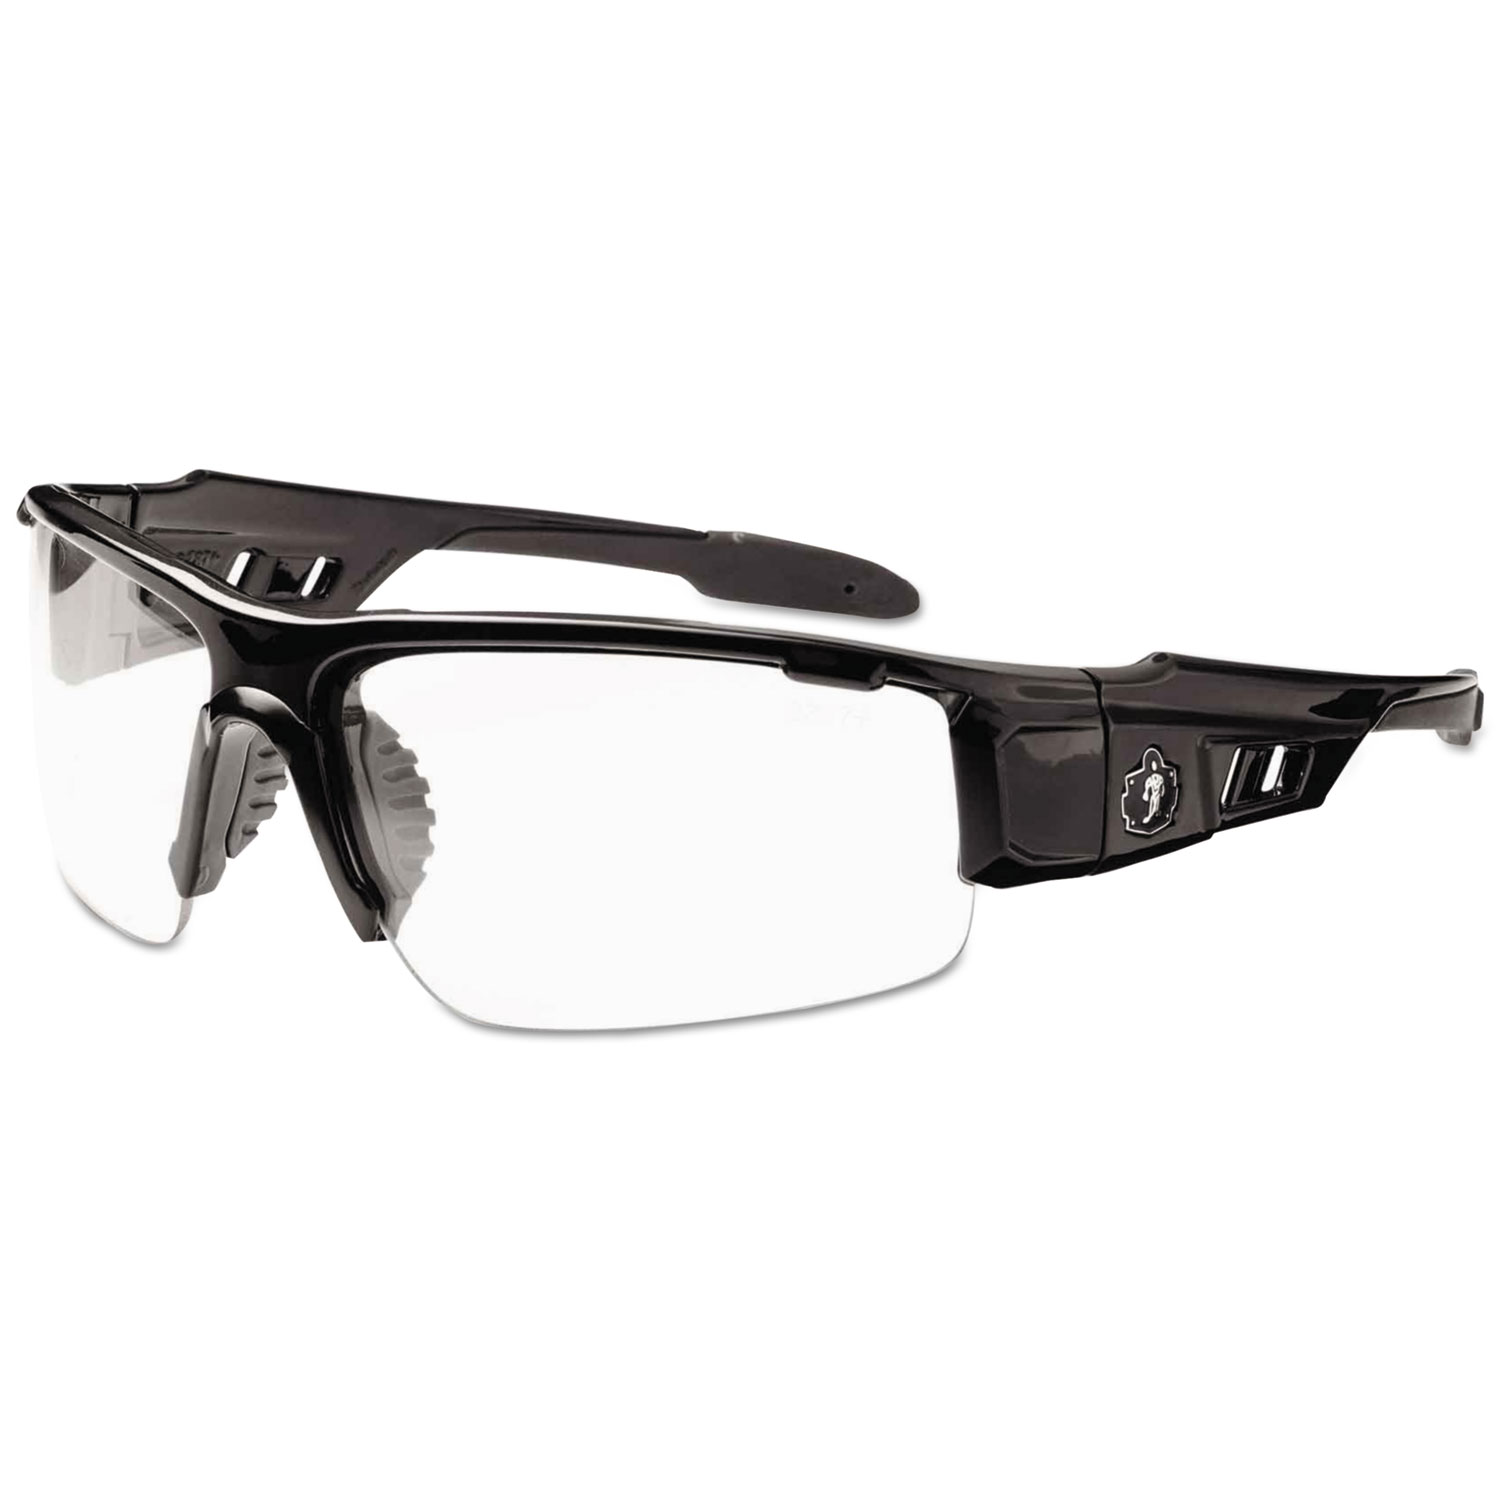  ergodyne 52000 Skullerz Dagr Safety Glasses, Black Frame/Clear Lens, Nylon/Polycarb (EGO52000) 